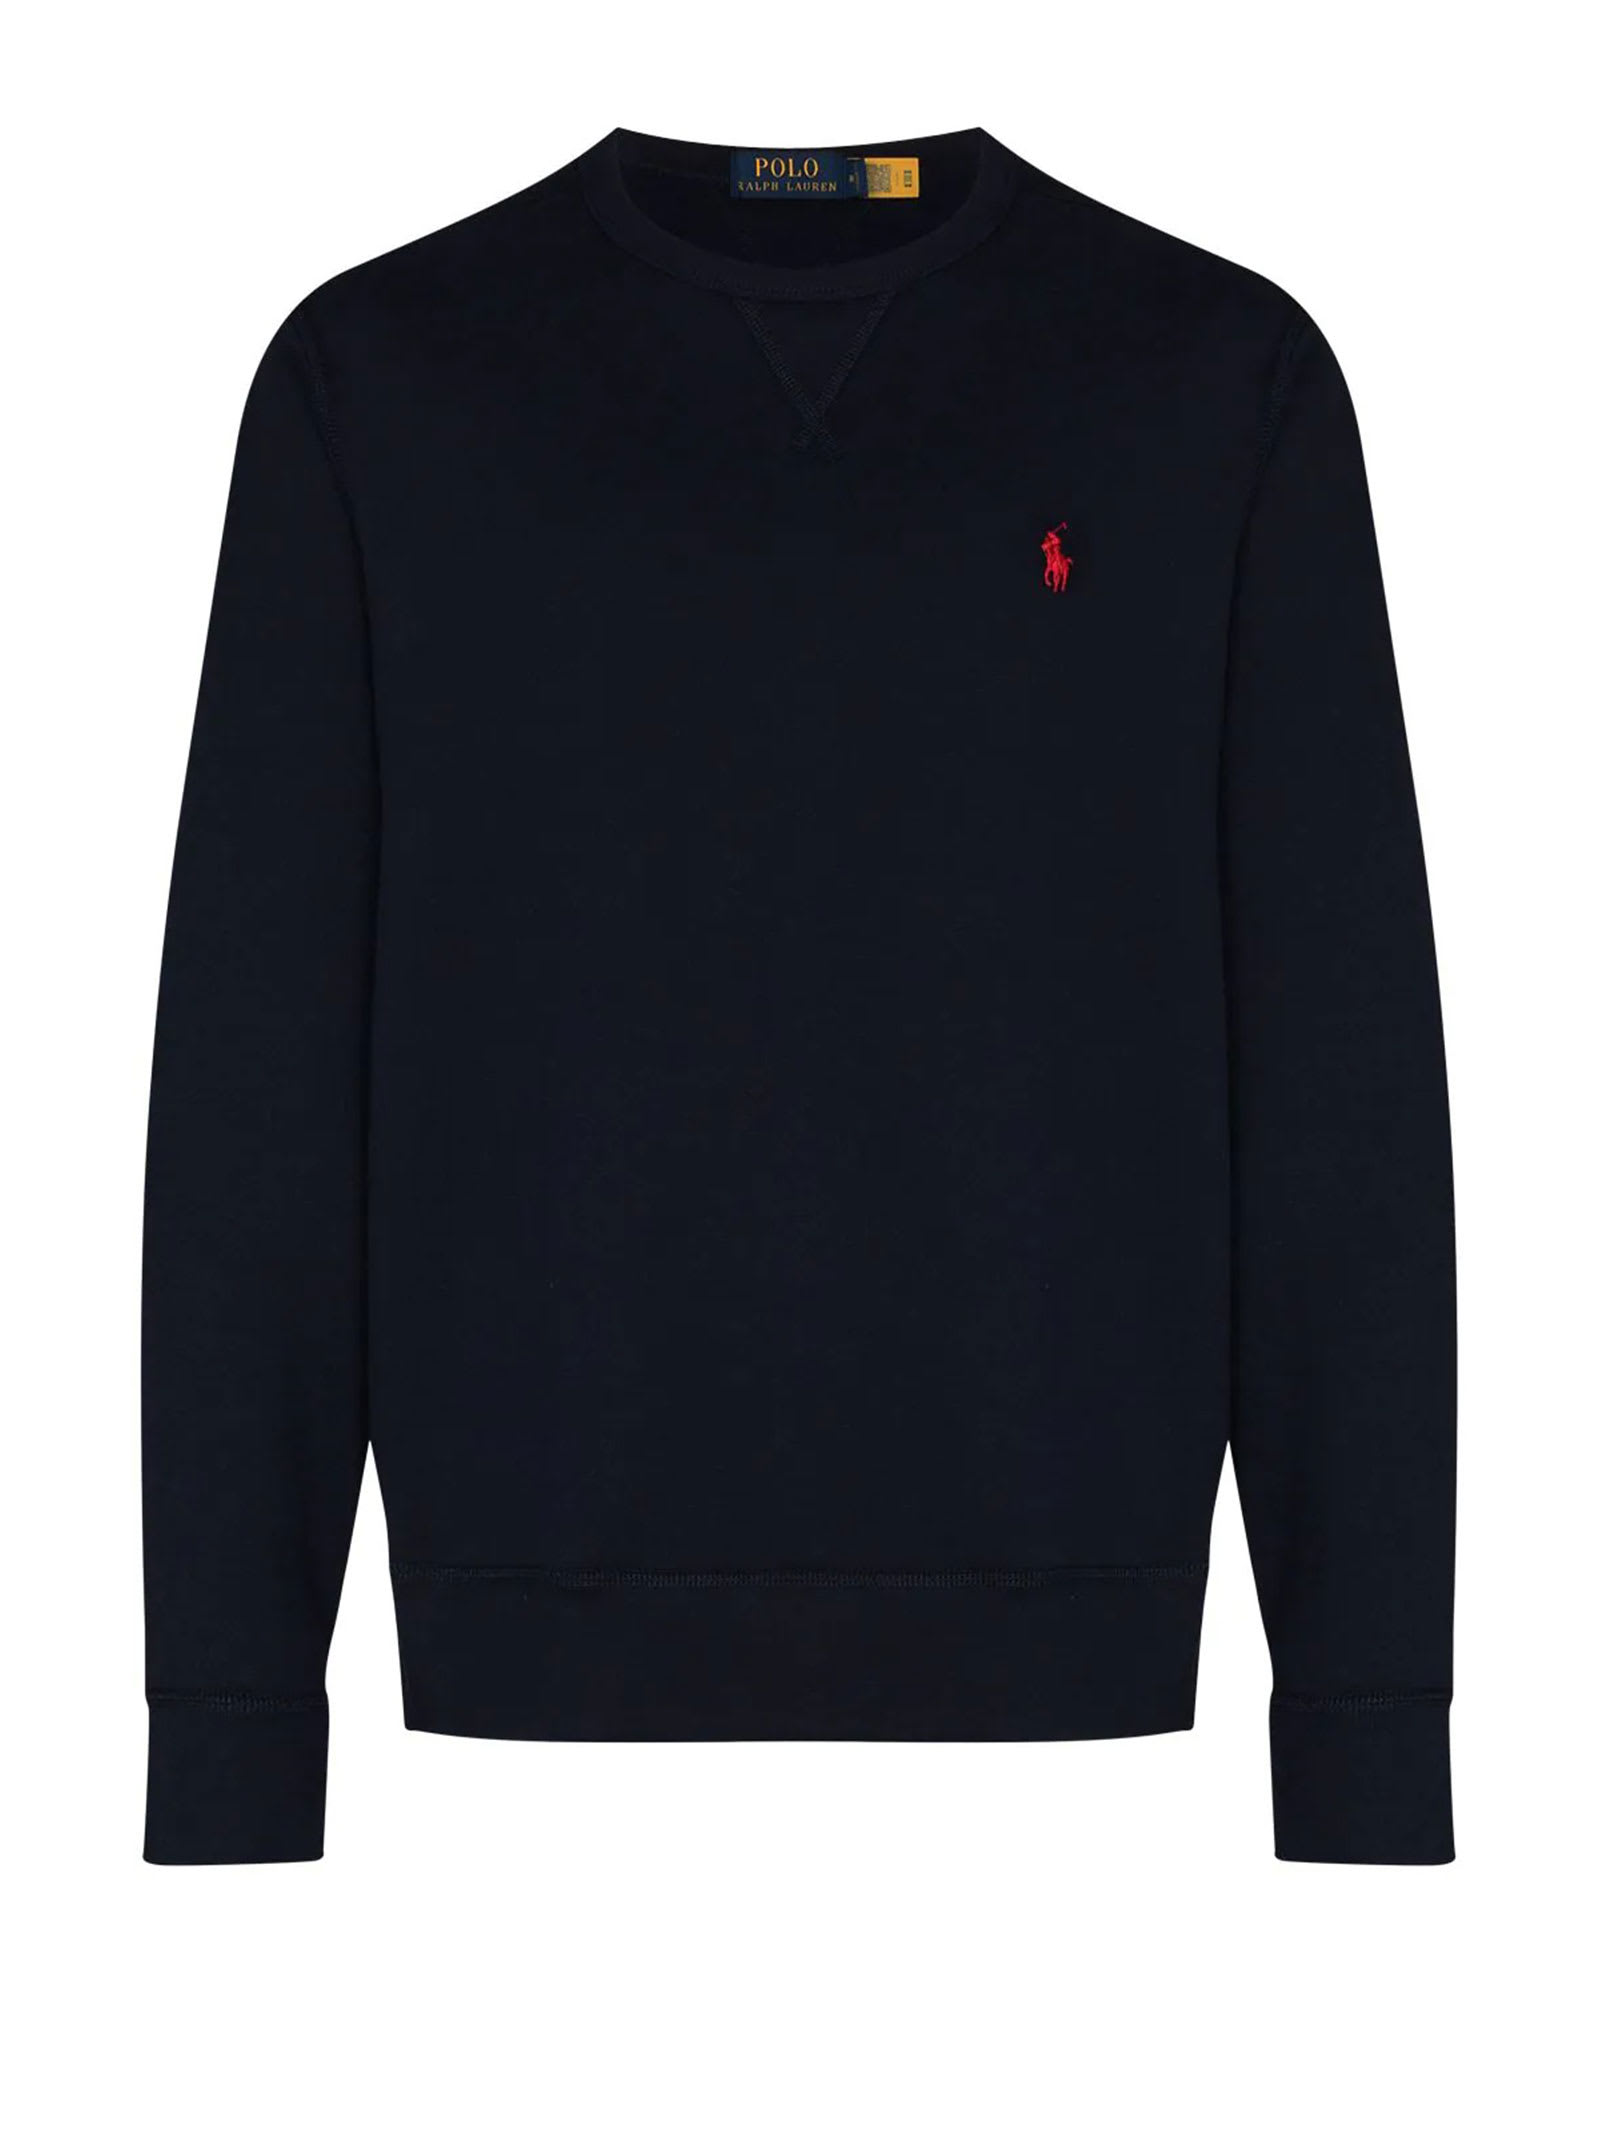 Polo Ralph Lauren Sweatshirt With Contrasting Logo